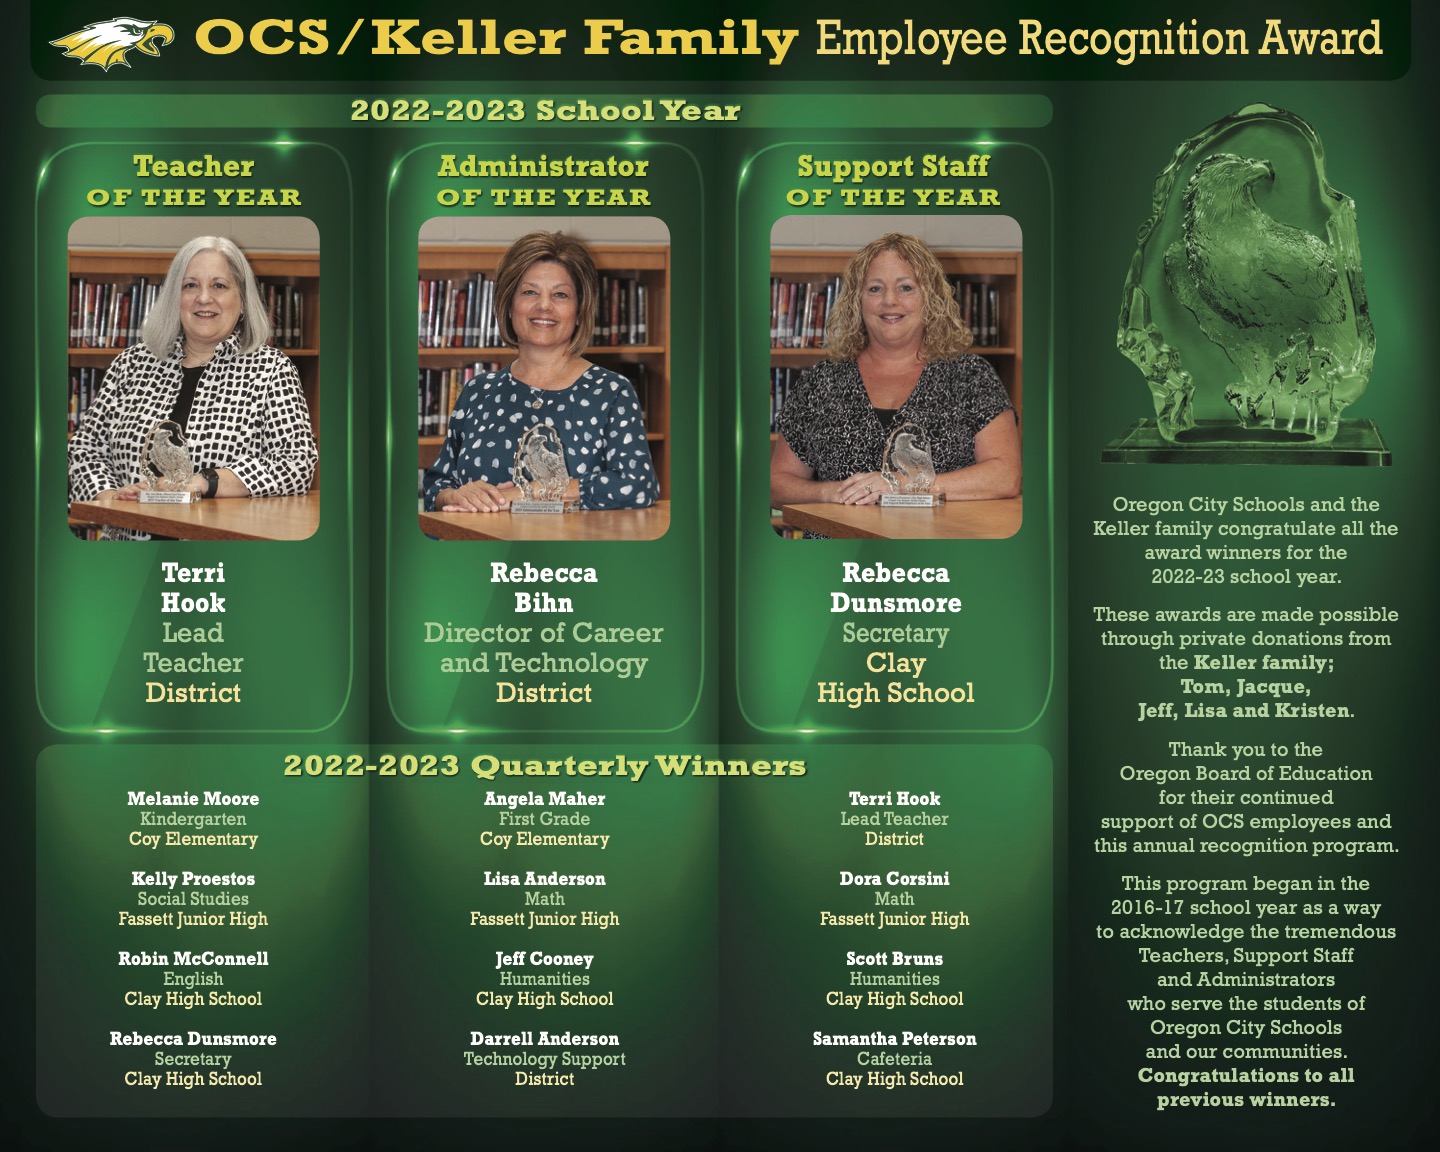 2022-23 OCS Keller Award Winners.  Teacher of the Year - Terri Hook. Administrator of the Year - Rebecca Bihn.  Support Staff of the Year - Rebecca Dunsmore